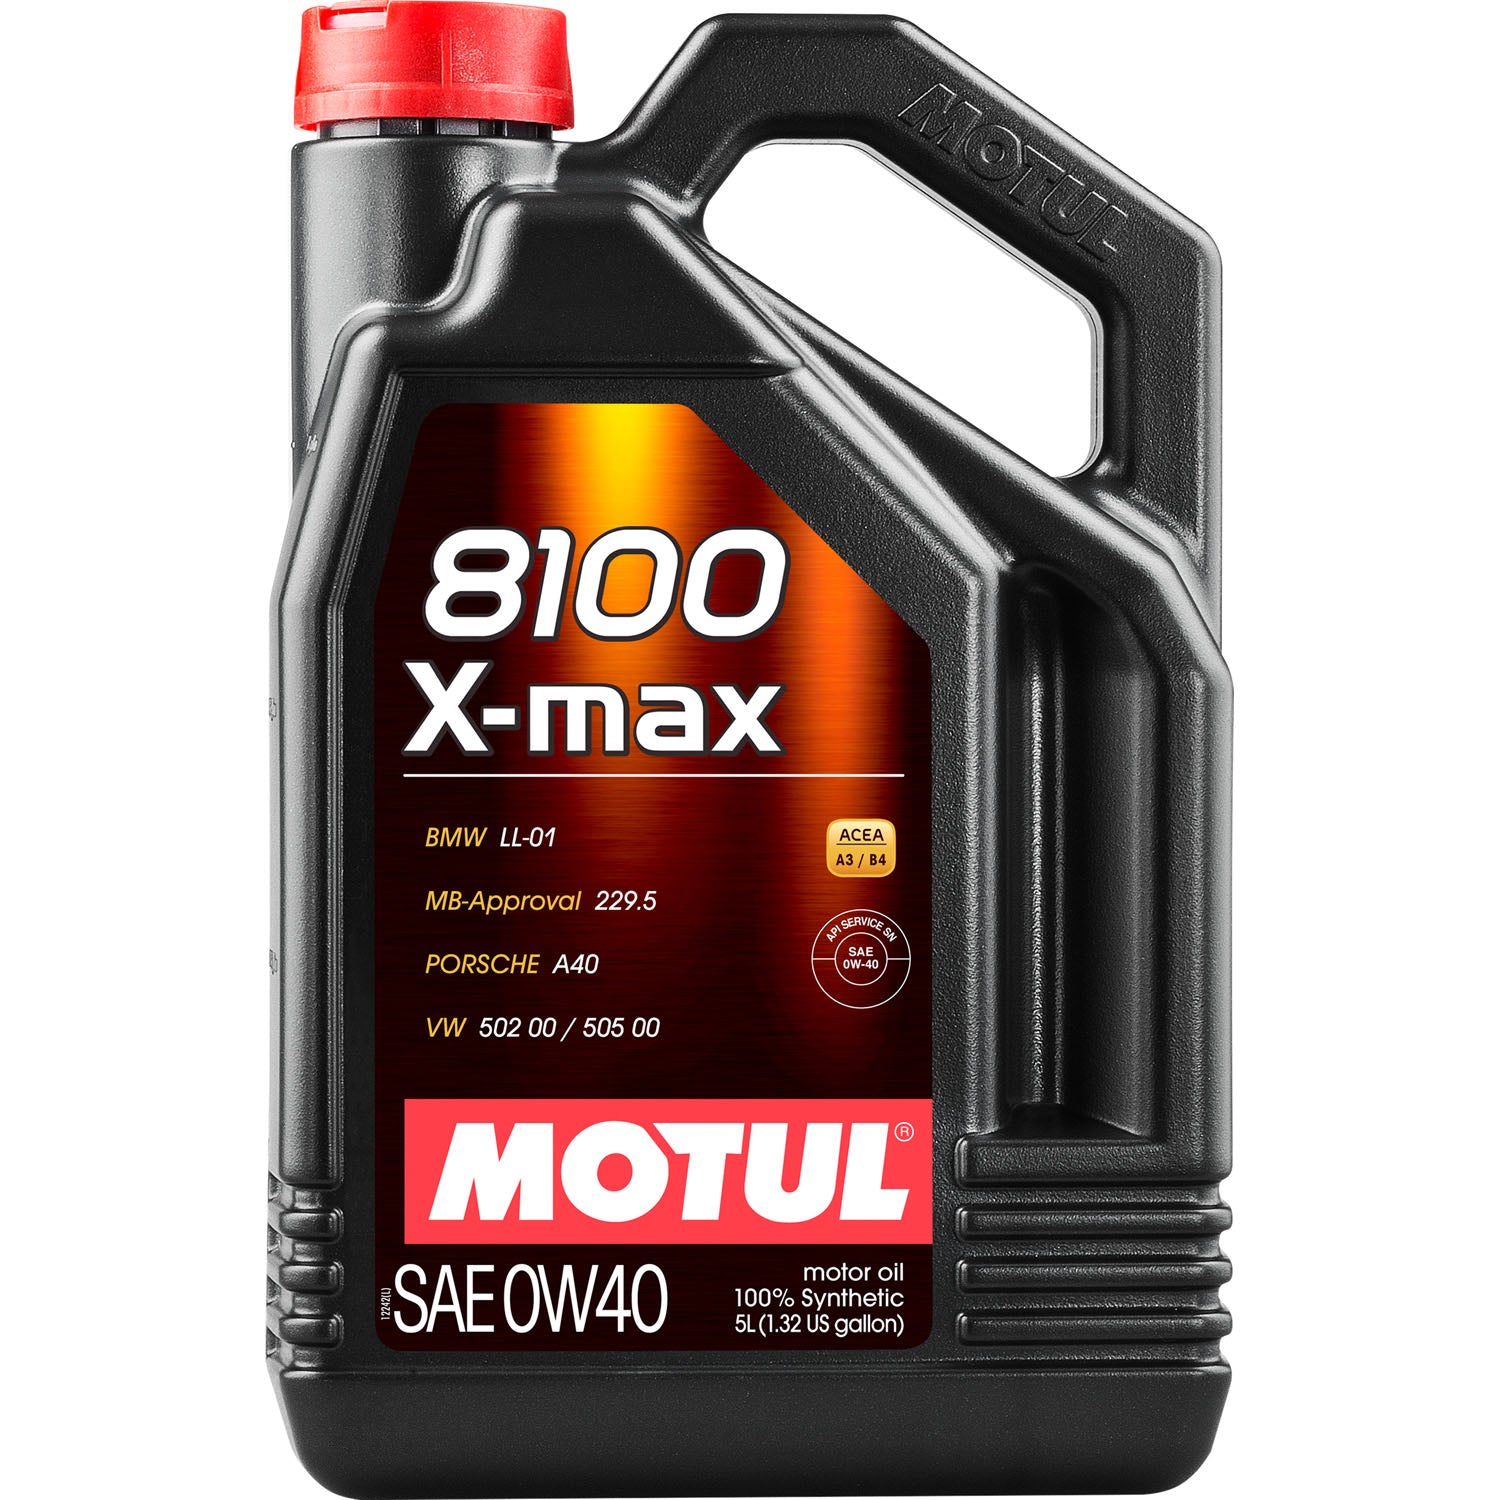 Motul 8100 X-Max Synthetic Motor Oil 0W40 - 5 Liter